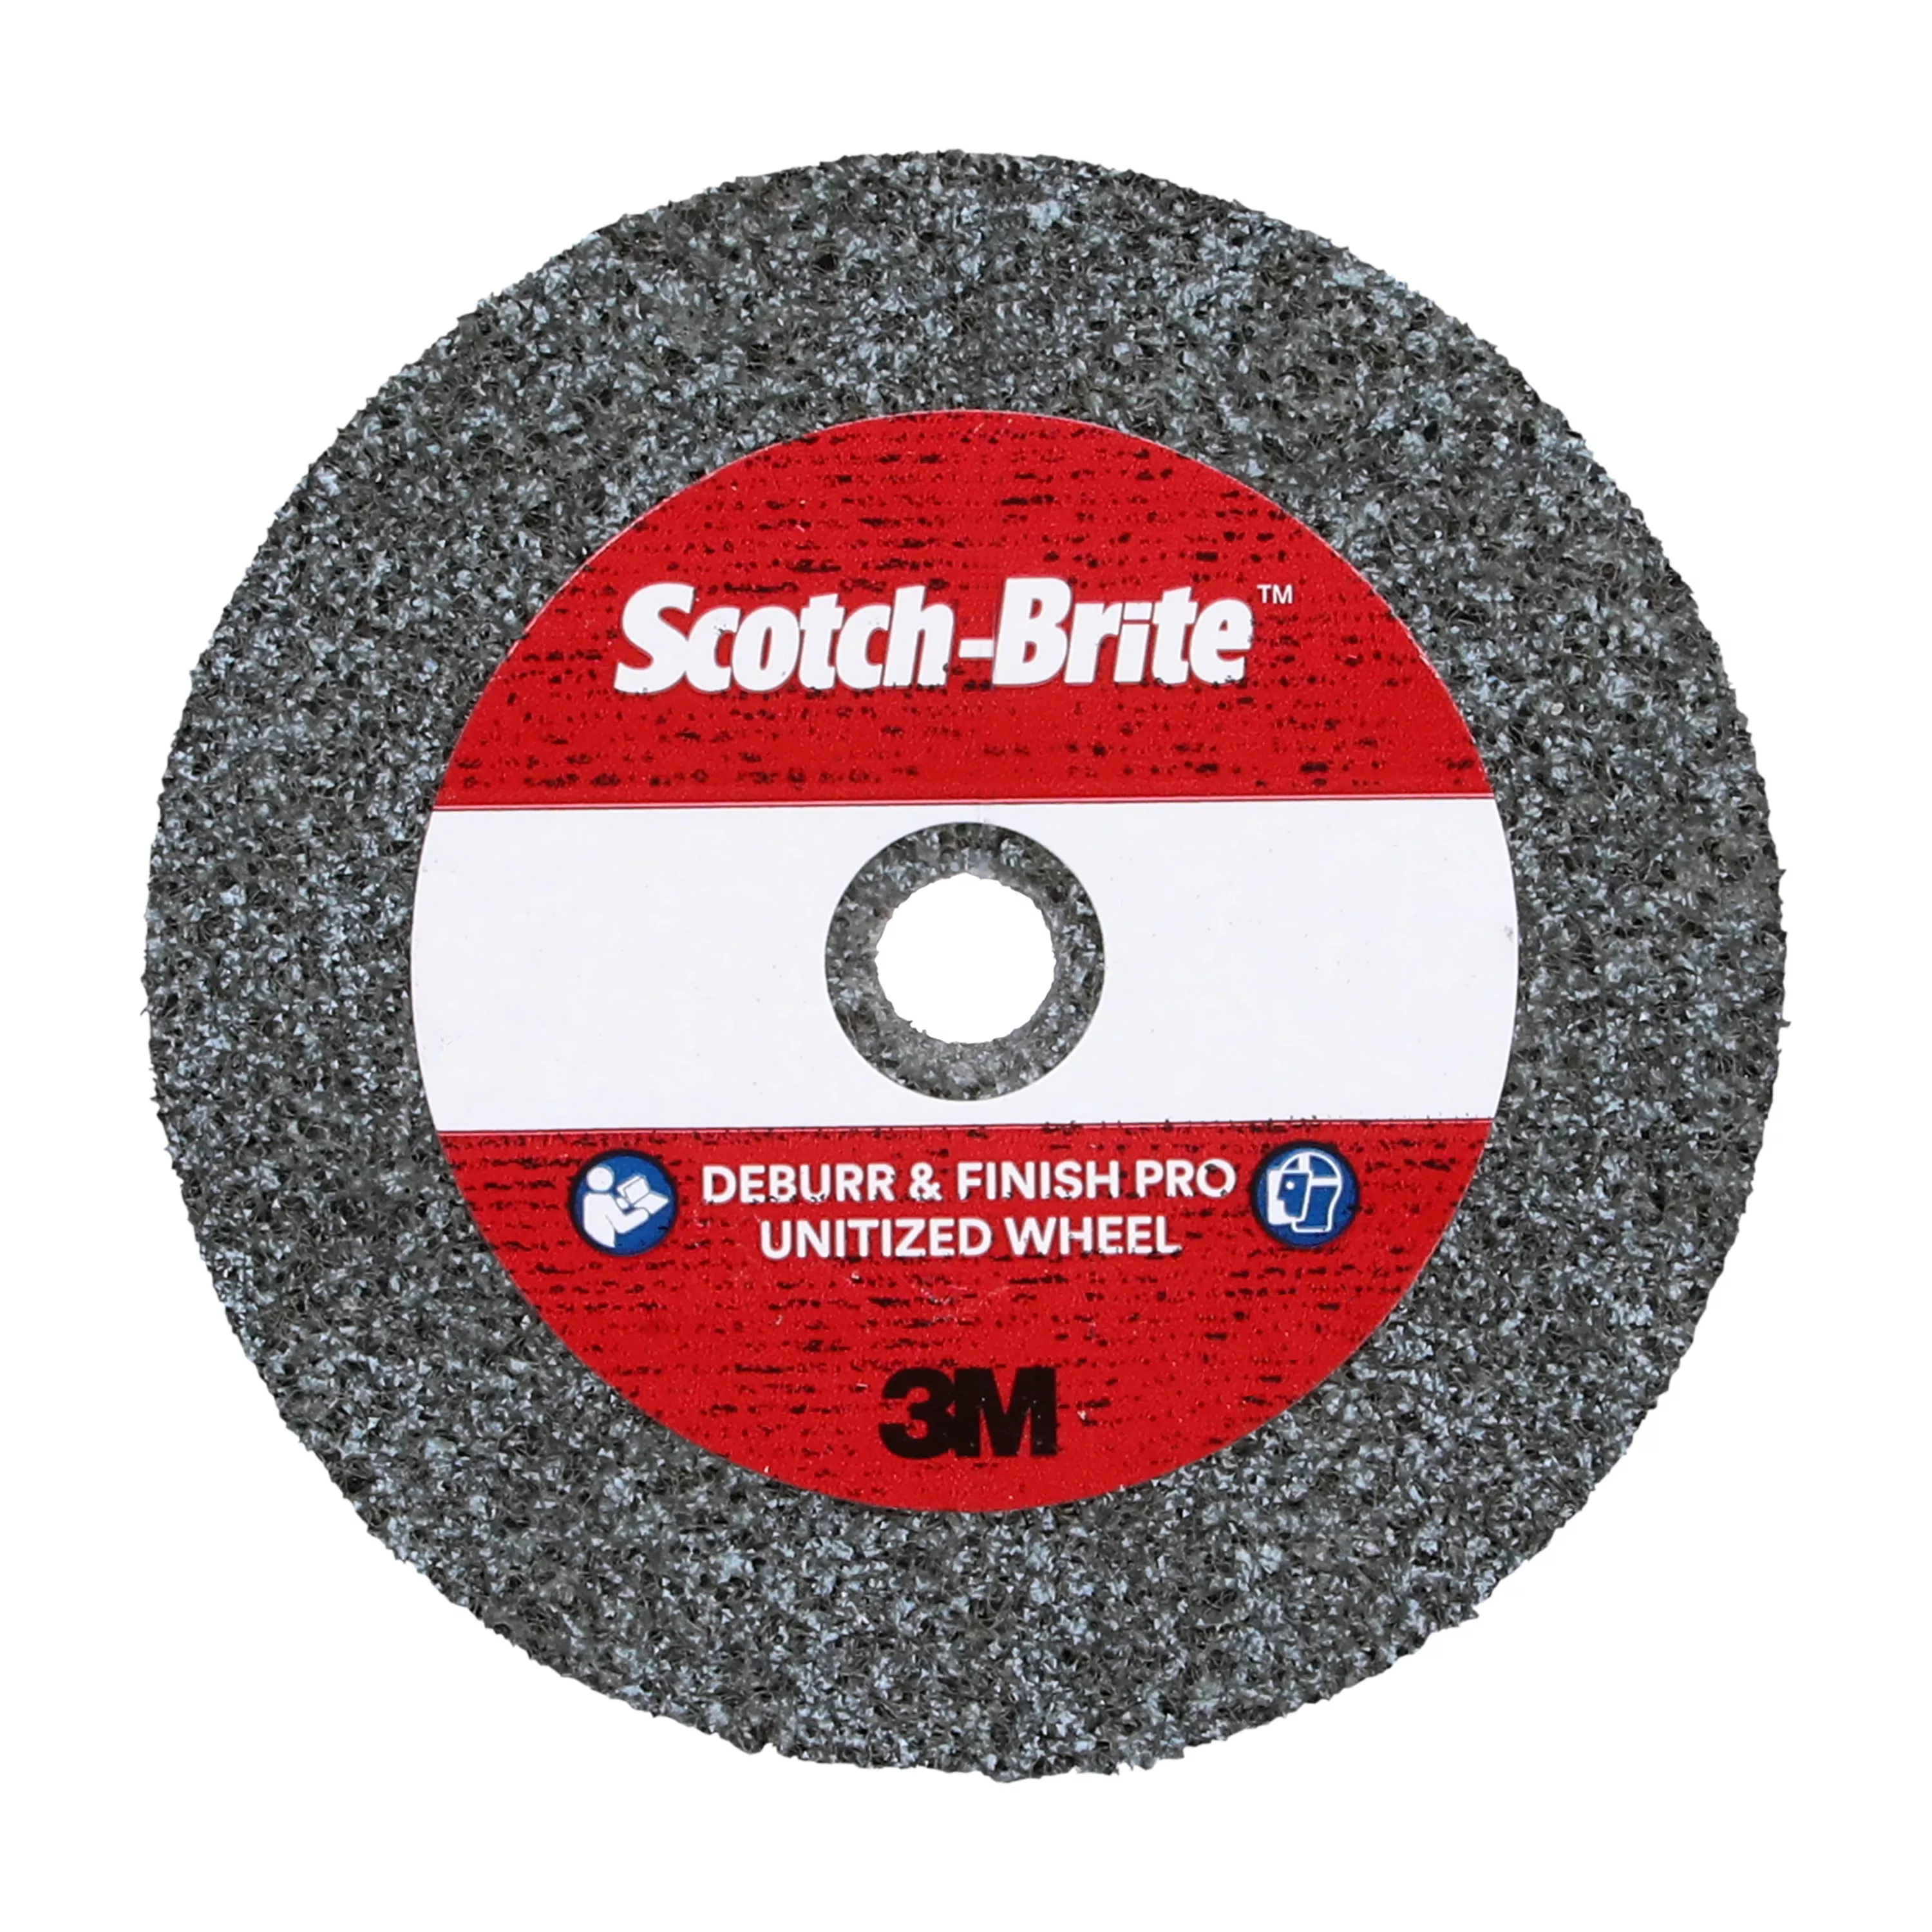 SKU 7100053414 | Scotch-Brite™ Deburr & Finish Pro Unitized Wheel